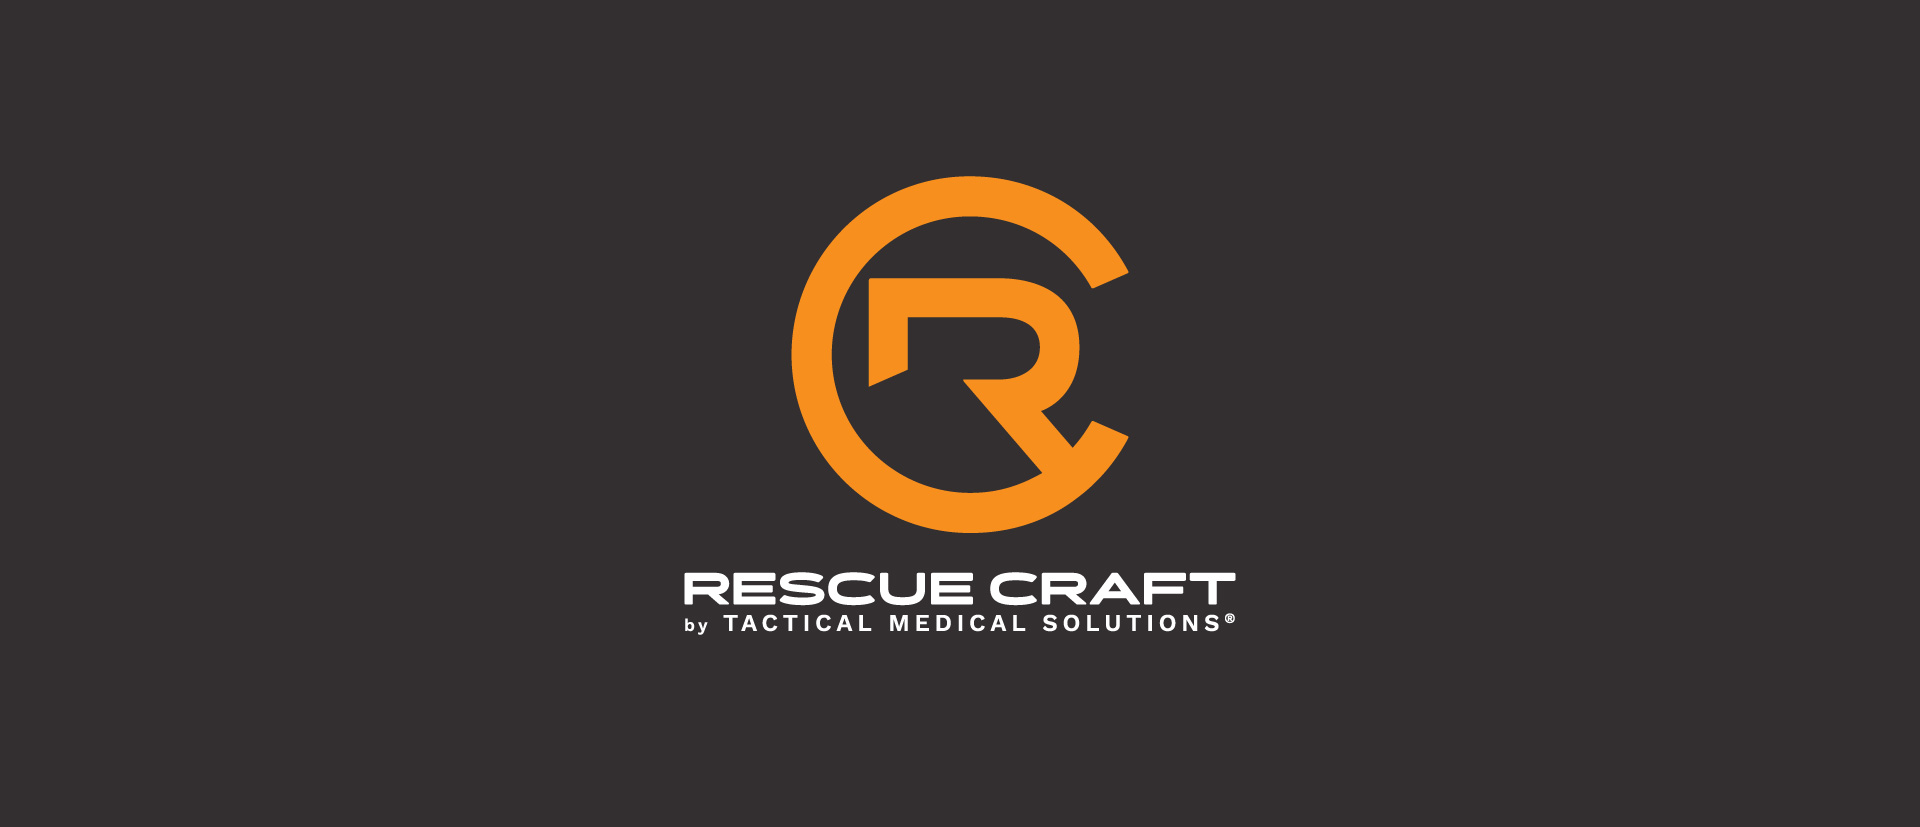 Rescue Craft logo